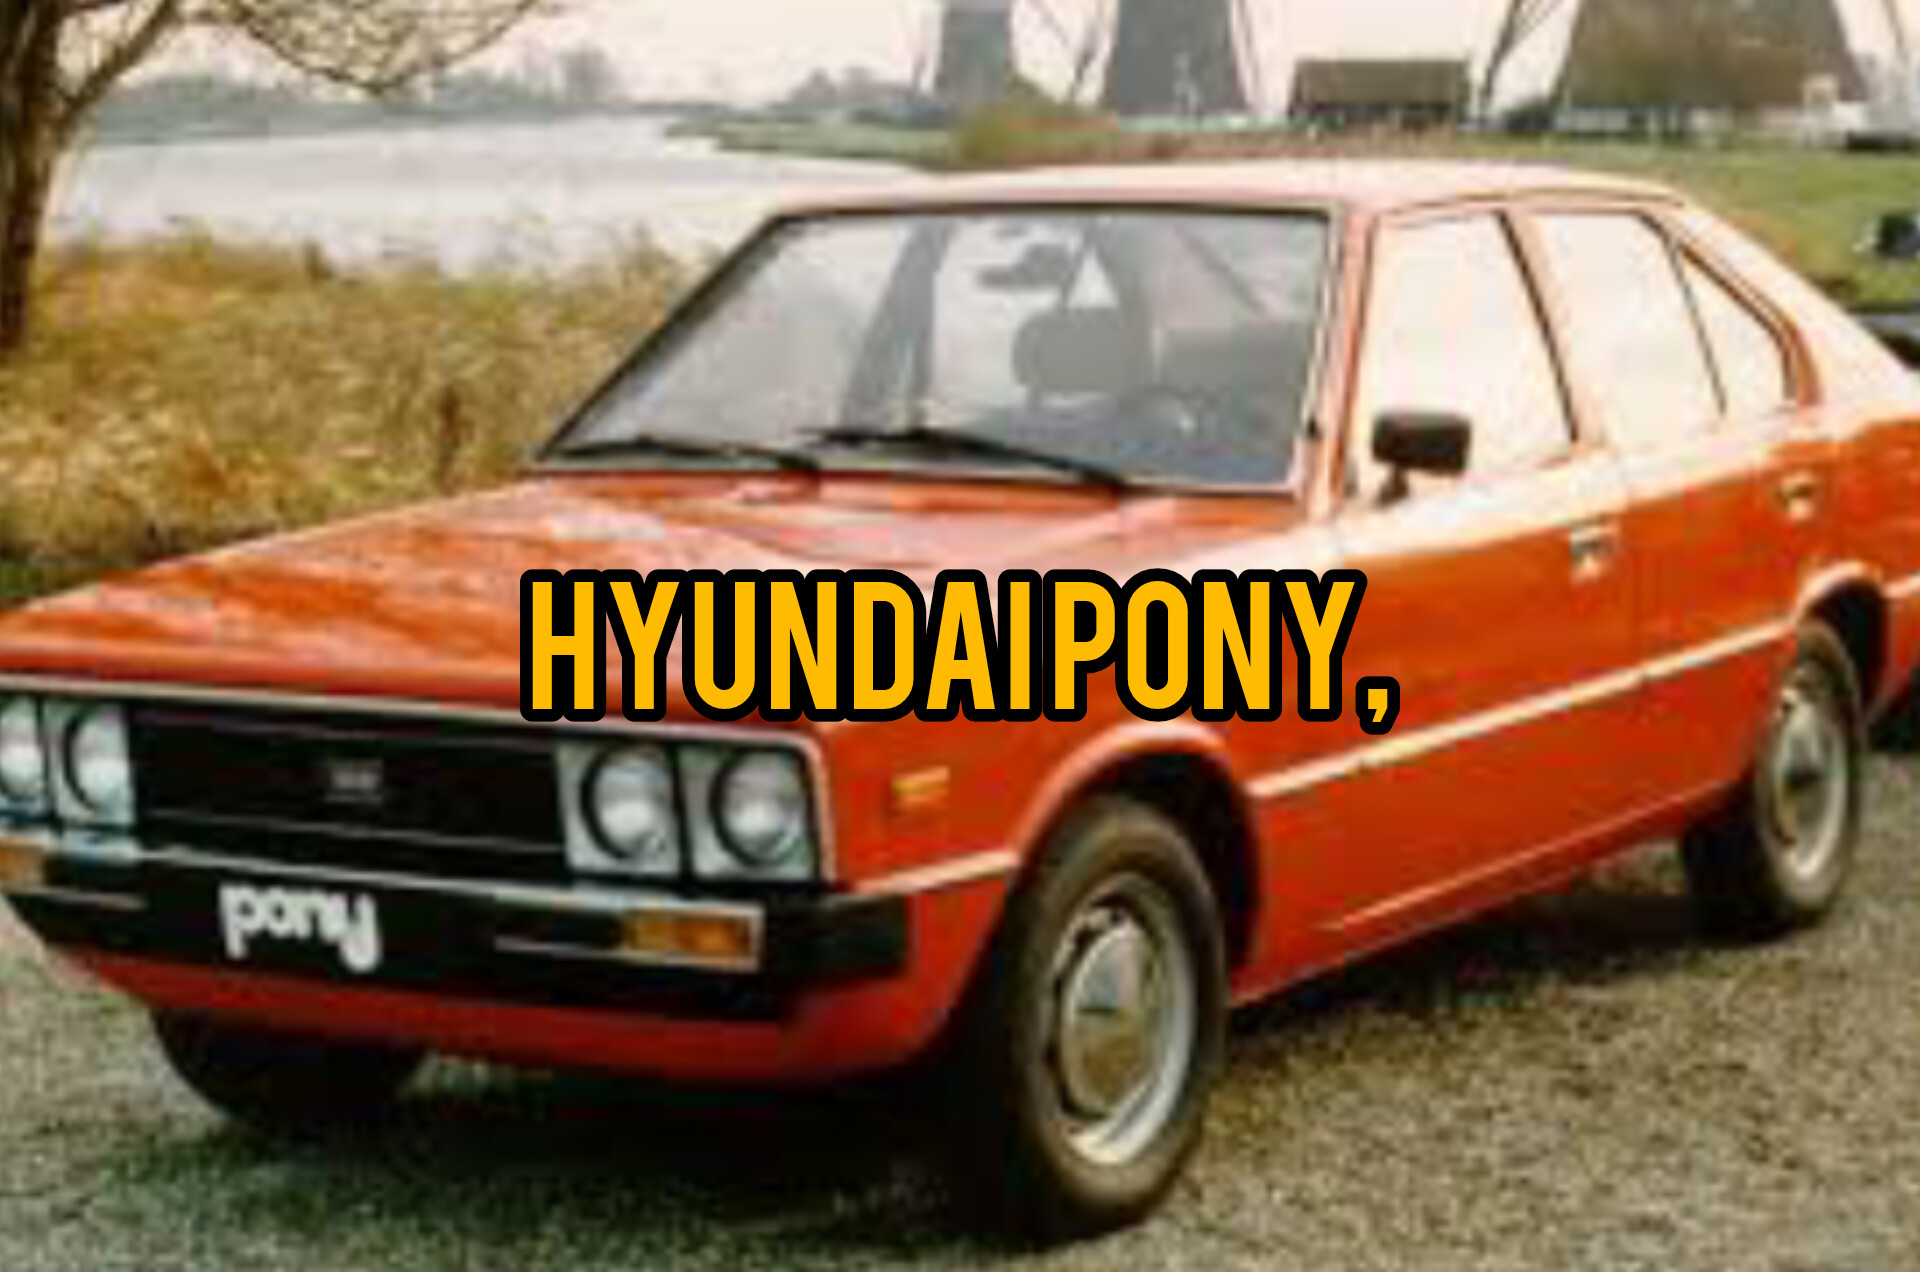 Hyundai Pony: Mobil Pertama Hyundai Bergaya Futuristic Geometris yang Populer Pada Masanya, Intip Detailnya